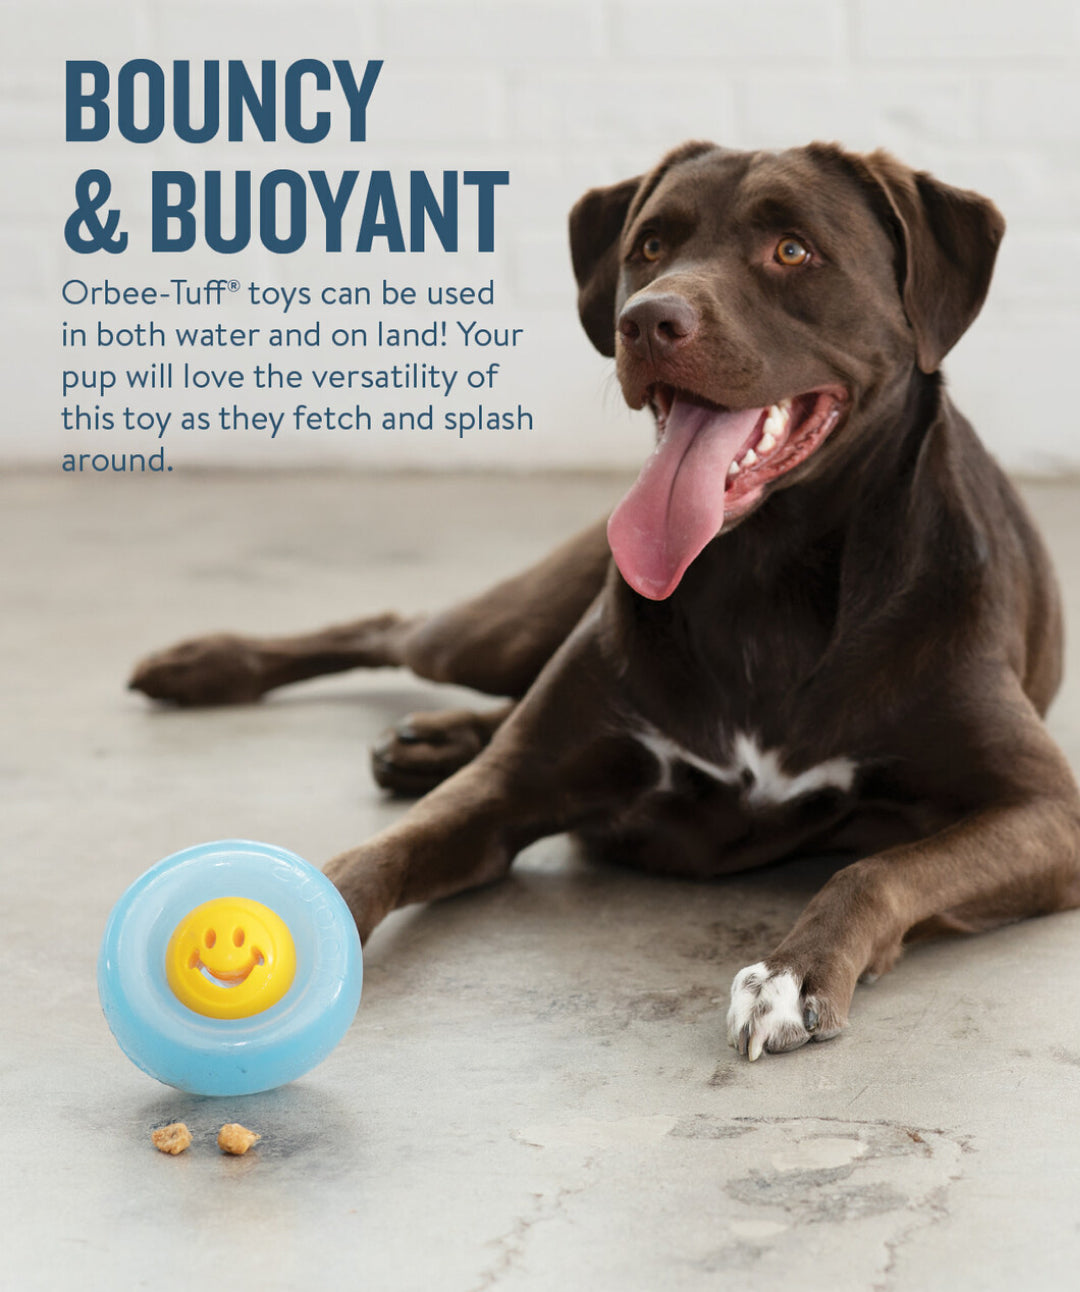 Orbee-Tuff ‘Happy Birthday’ Treat Dispensing Dog Toy by Outward Hound